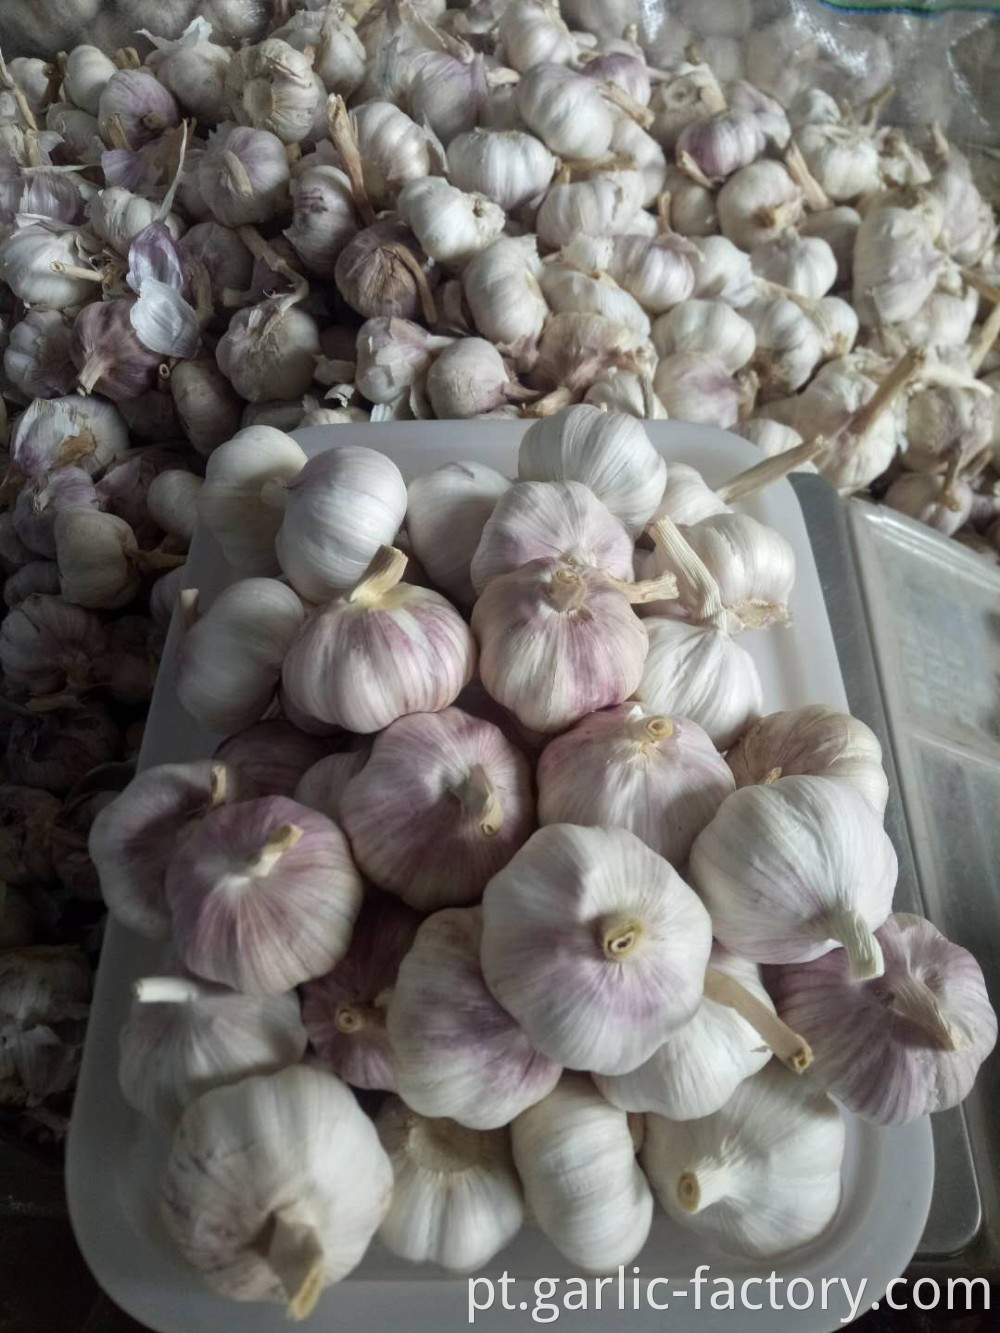 Hot sale garlic market in the world